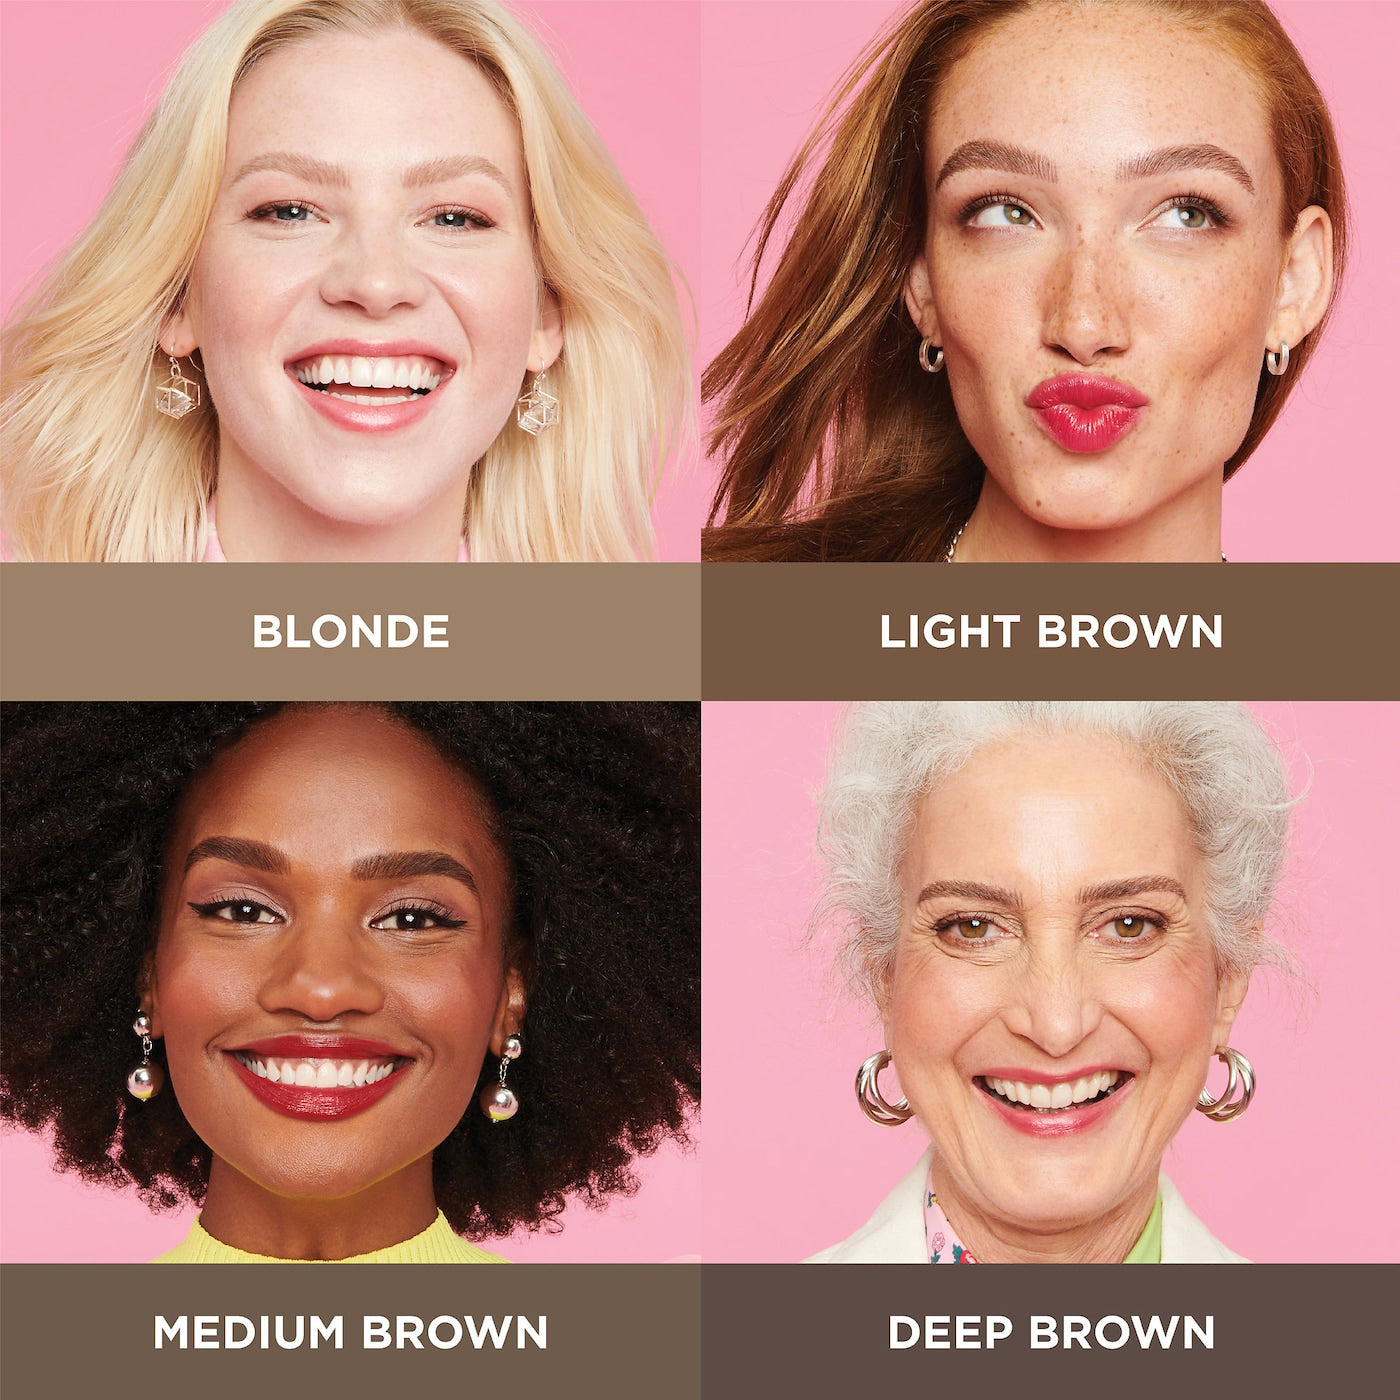 Benefit Cosmetics | Brow Microfilling Eyebrow Pen | Medium Brown